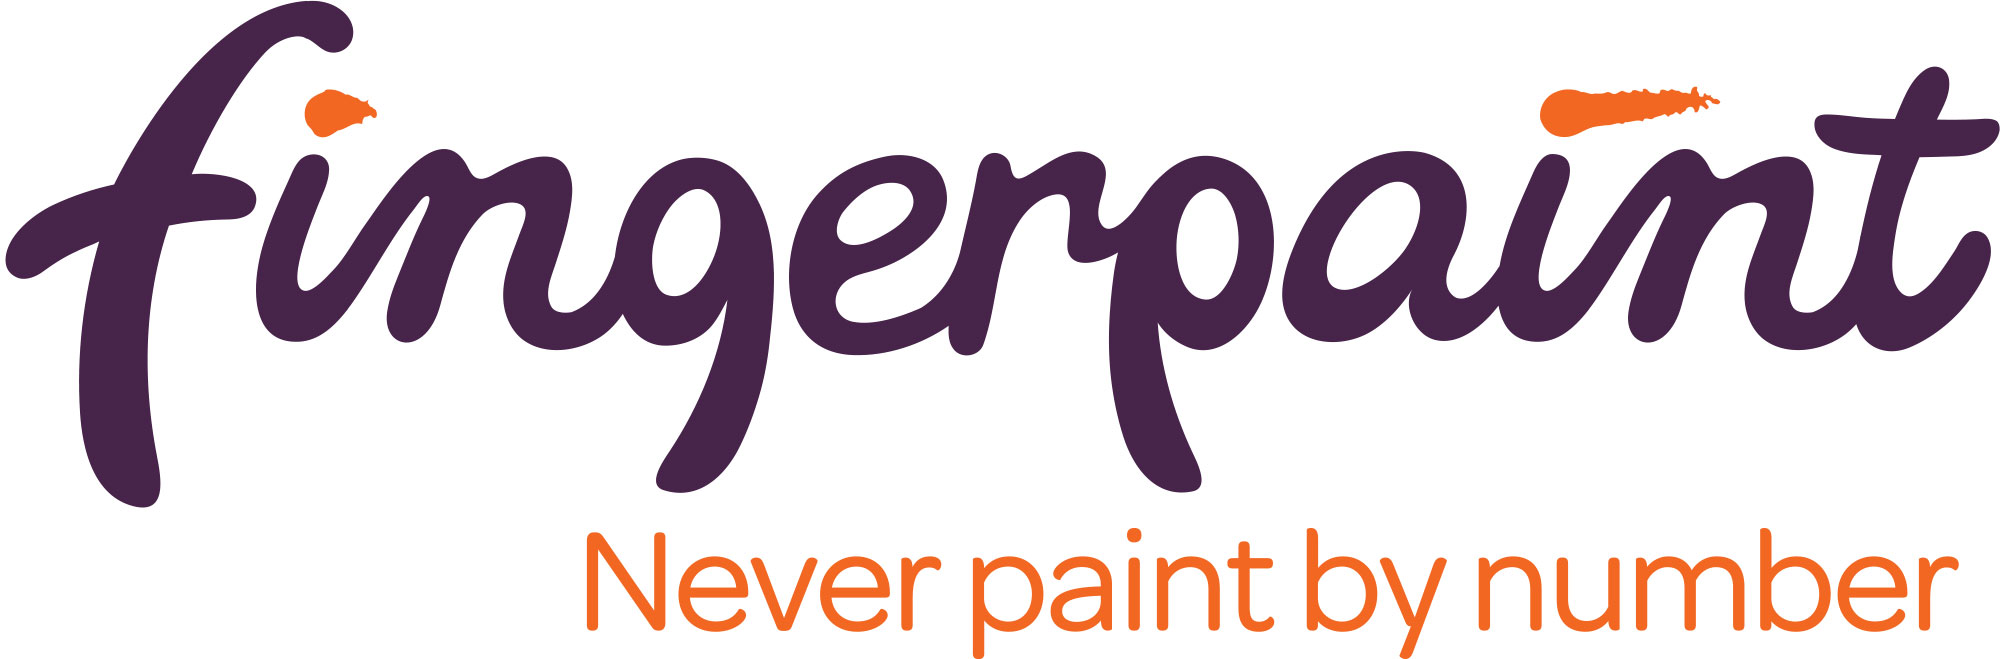 2018 fingerpaint marketing logo